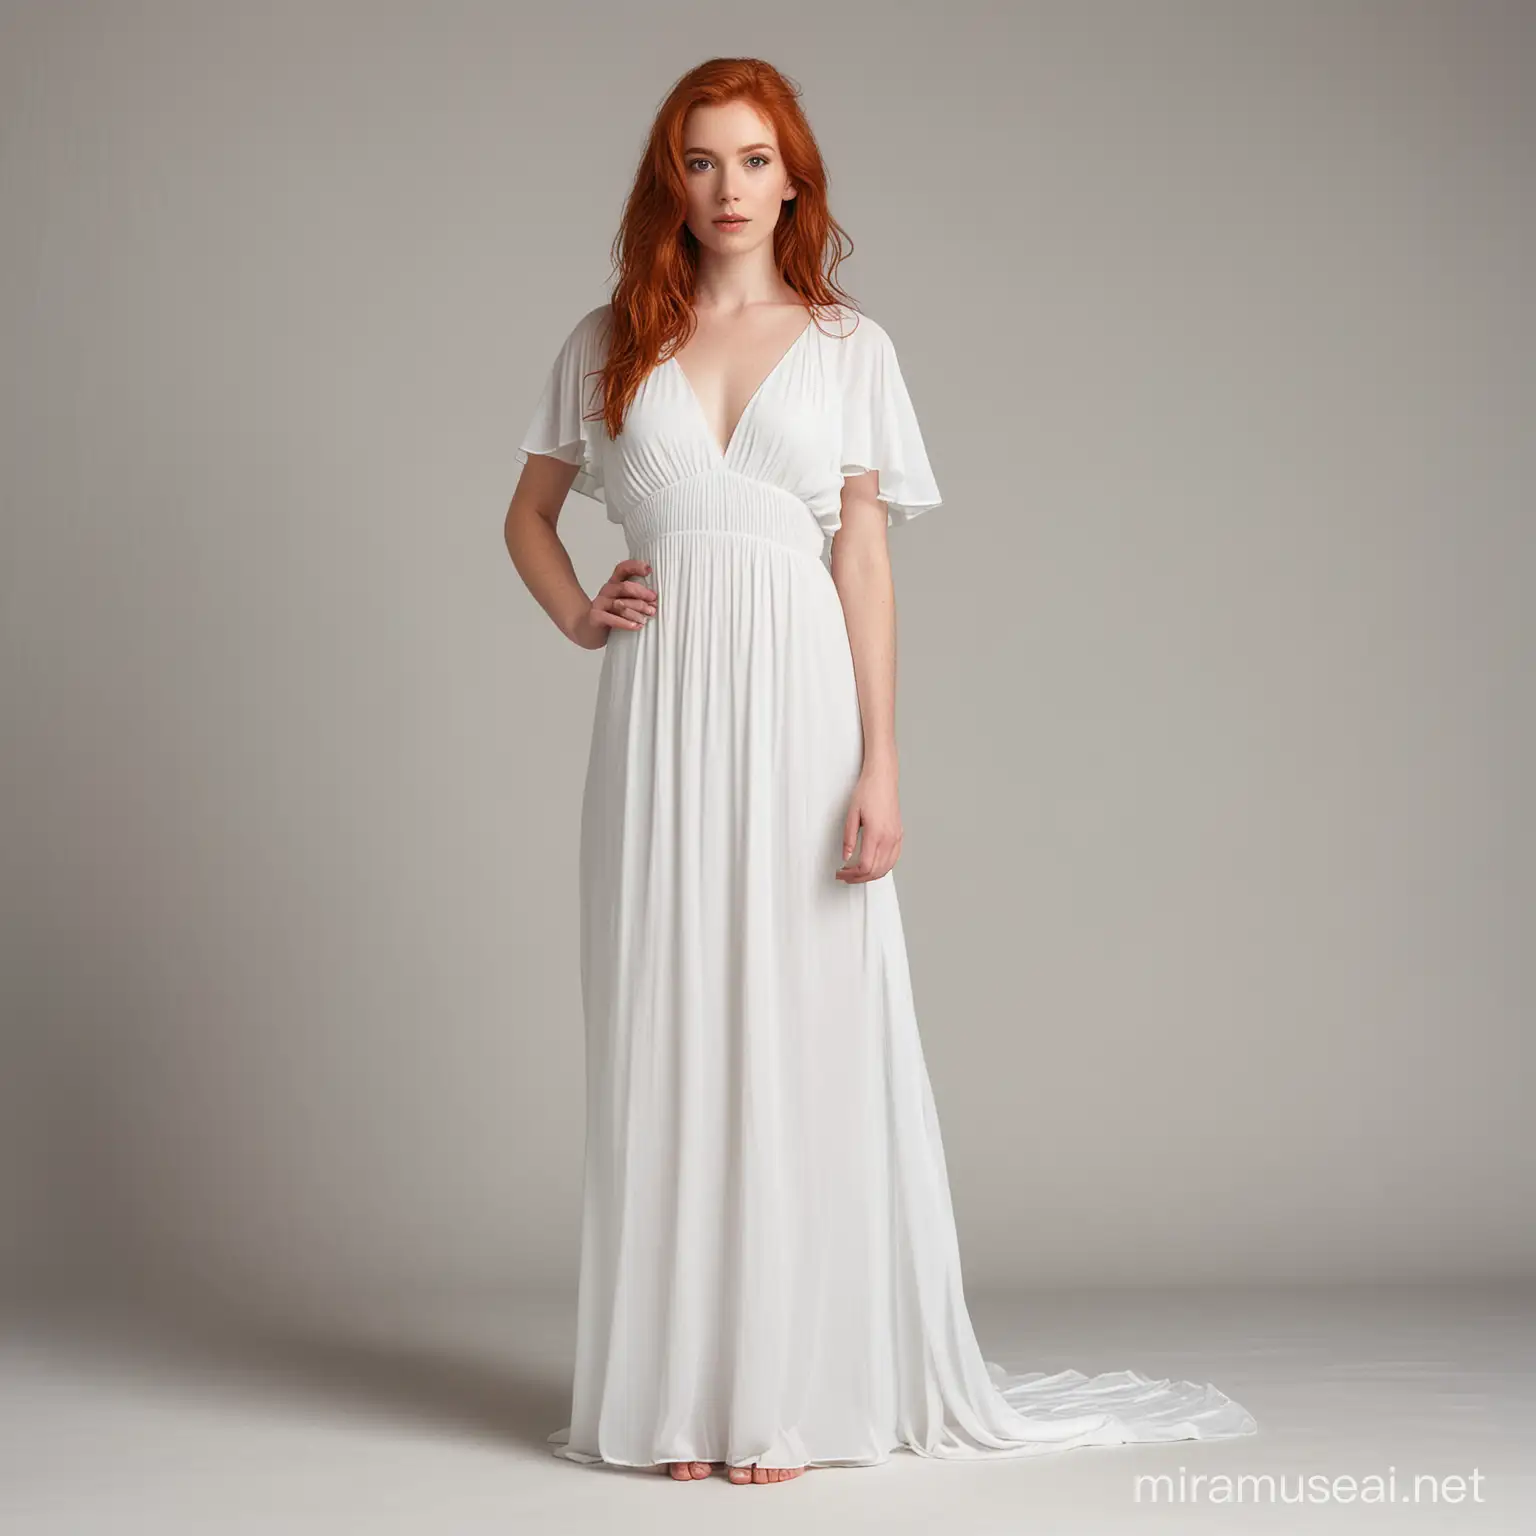 A redheaded model in a long white dress, full length image